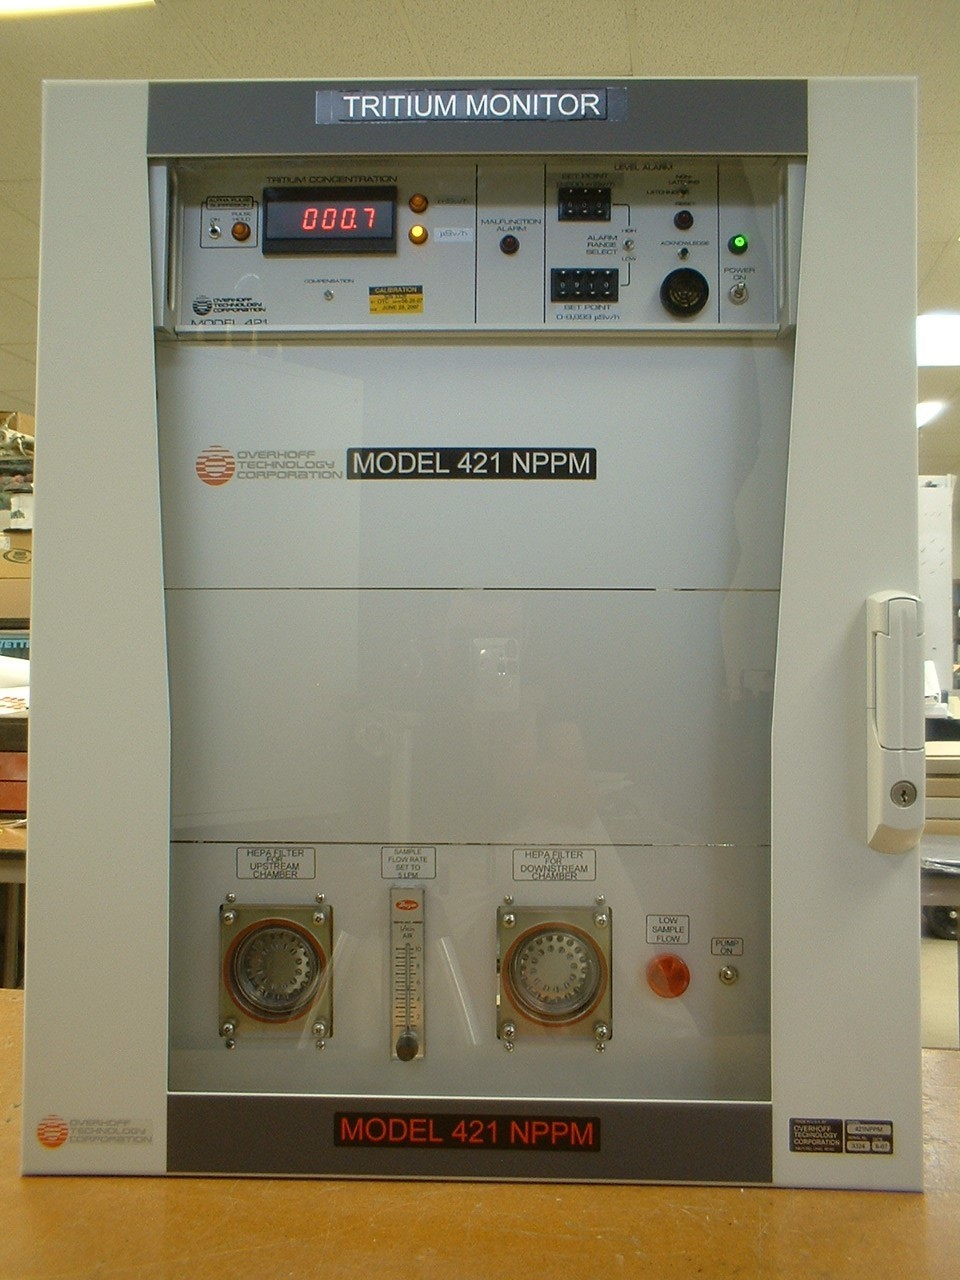 Model 421NPPM 核电站氚监测仪